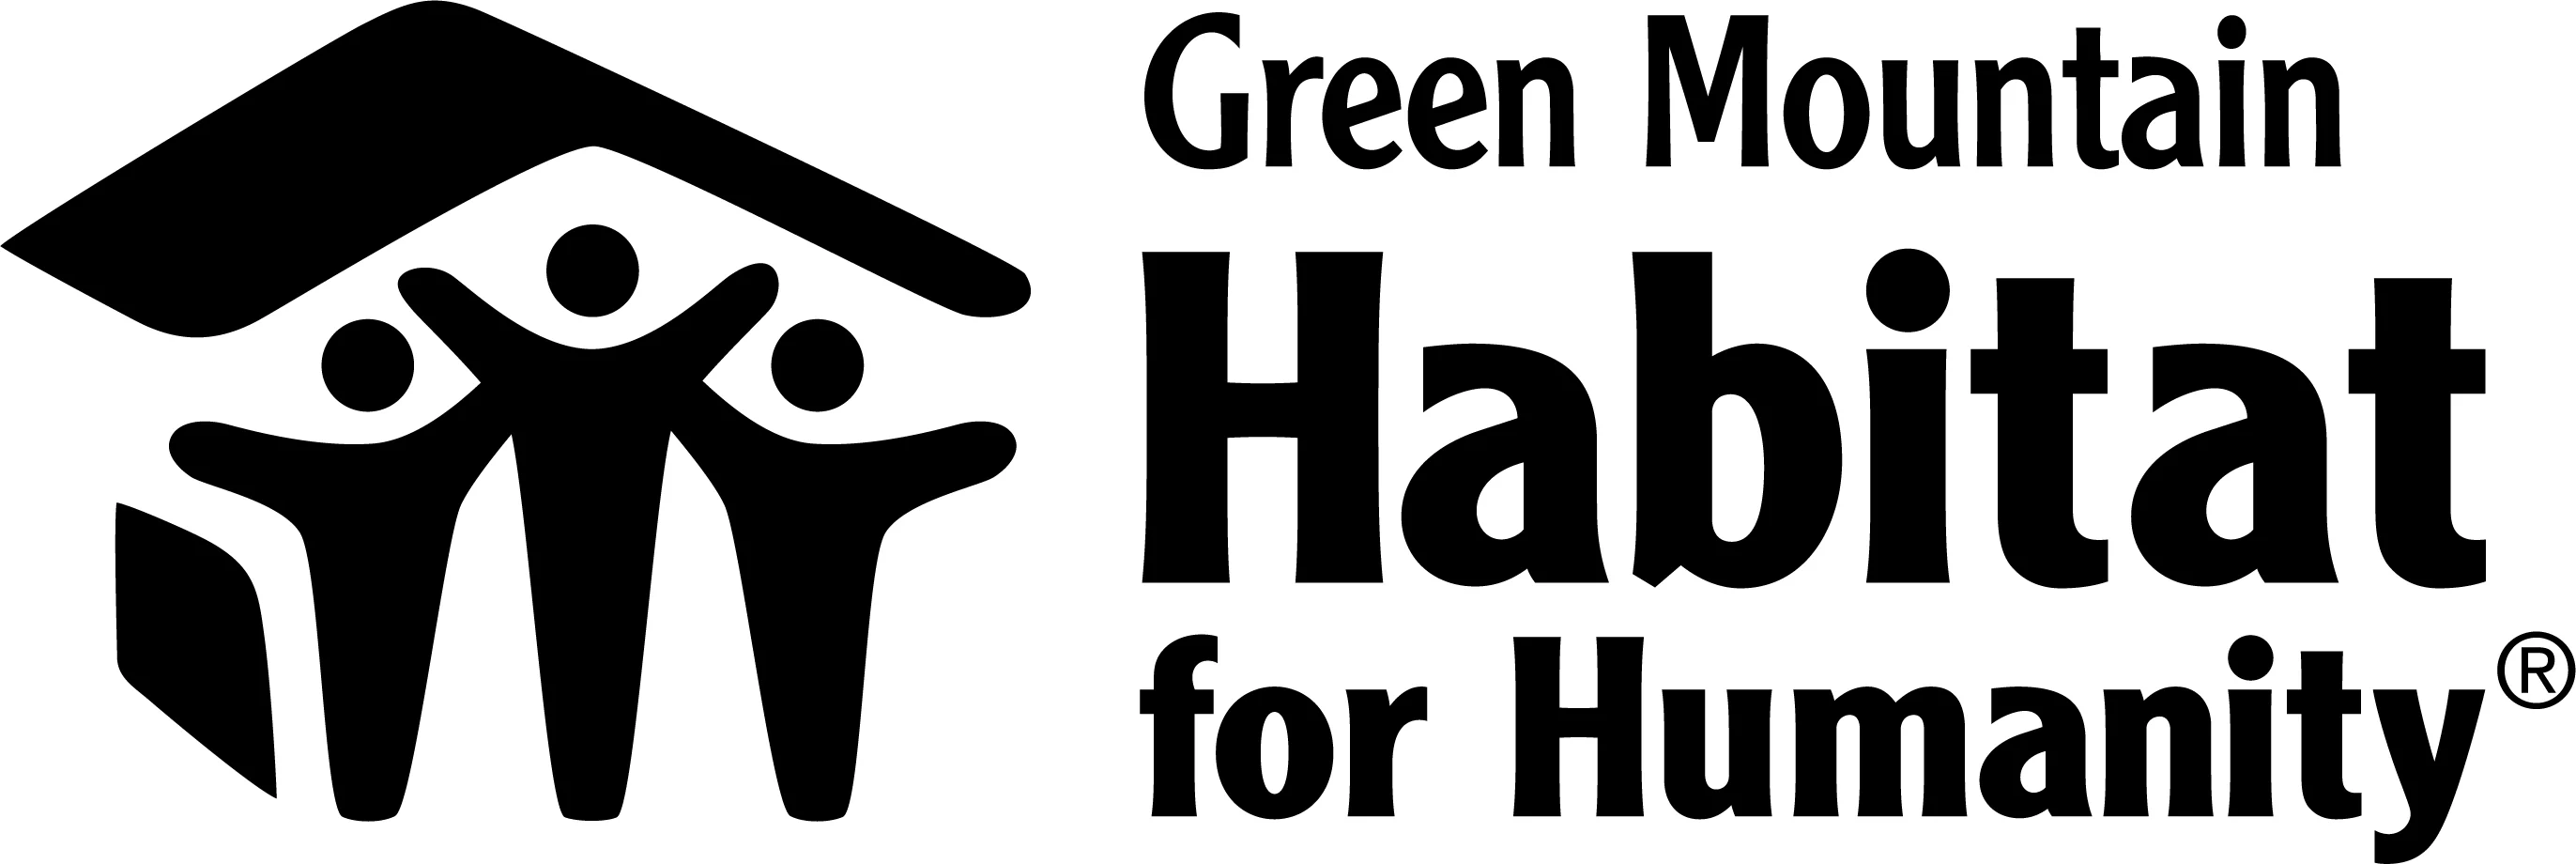 Green Mountain Habitat for Humanity 